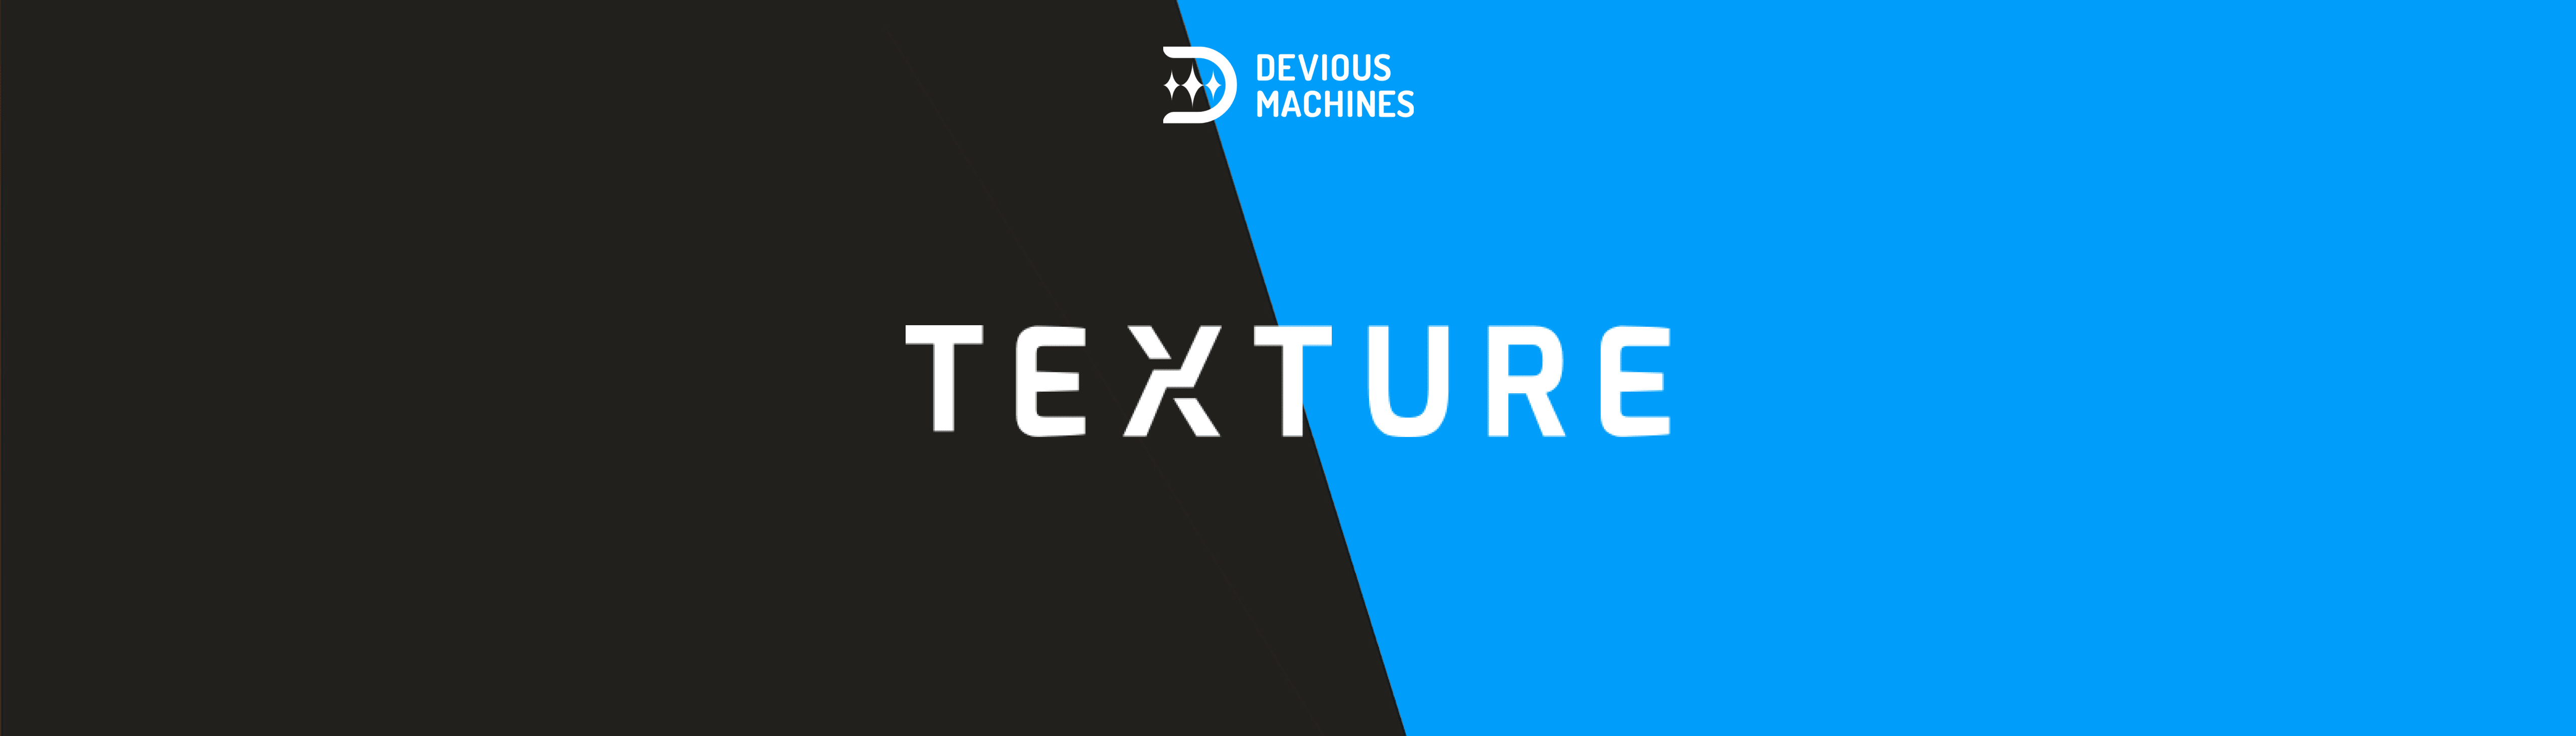 Devious Machines Texture